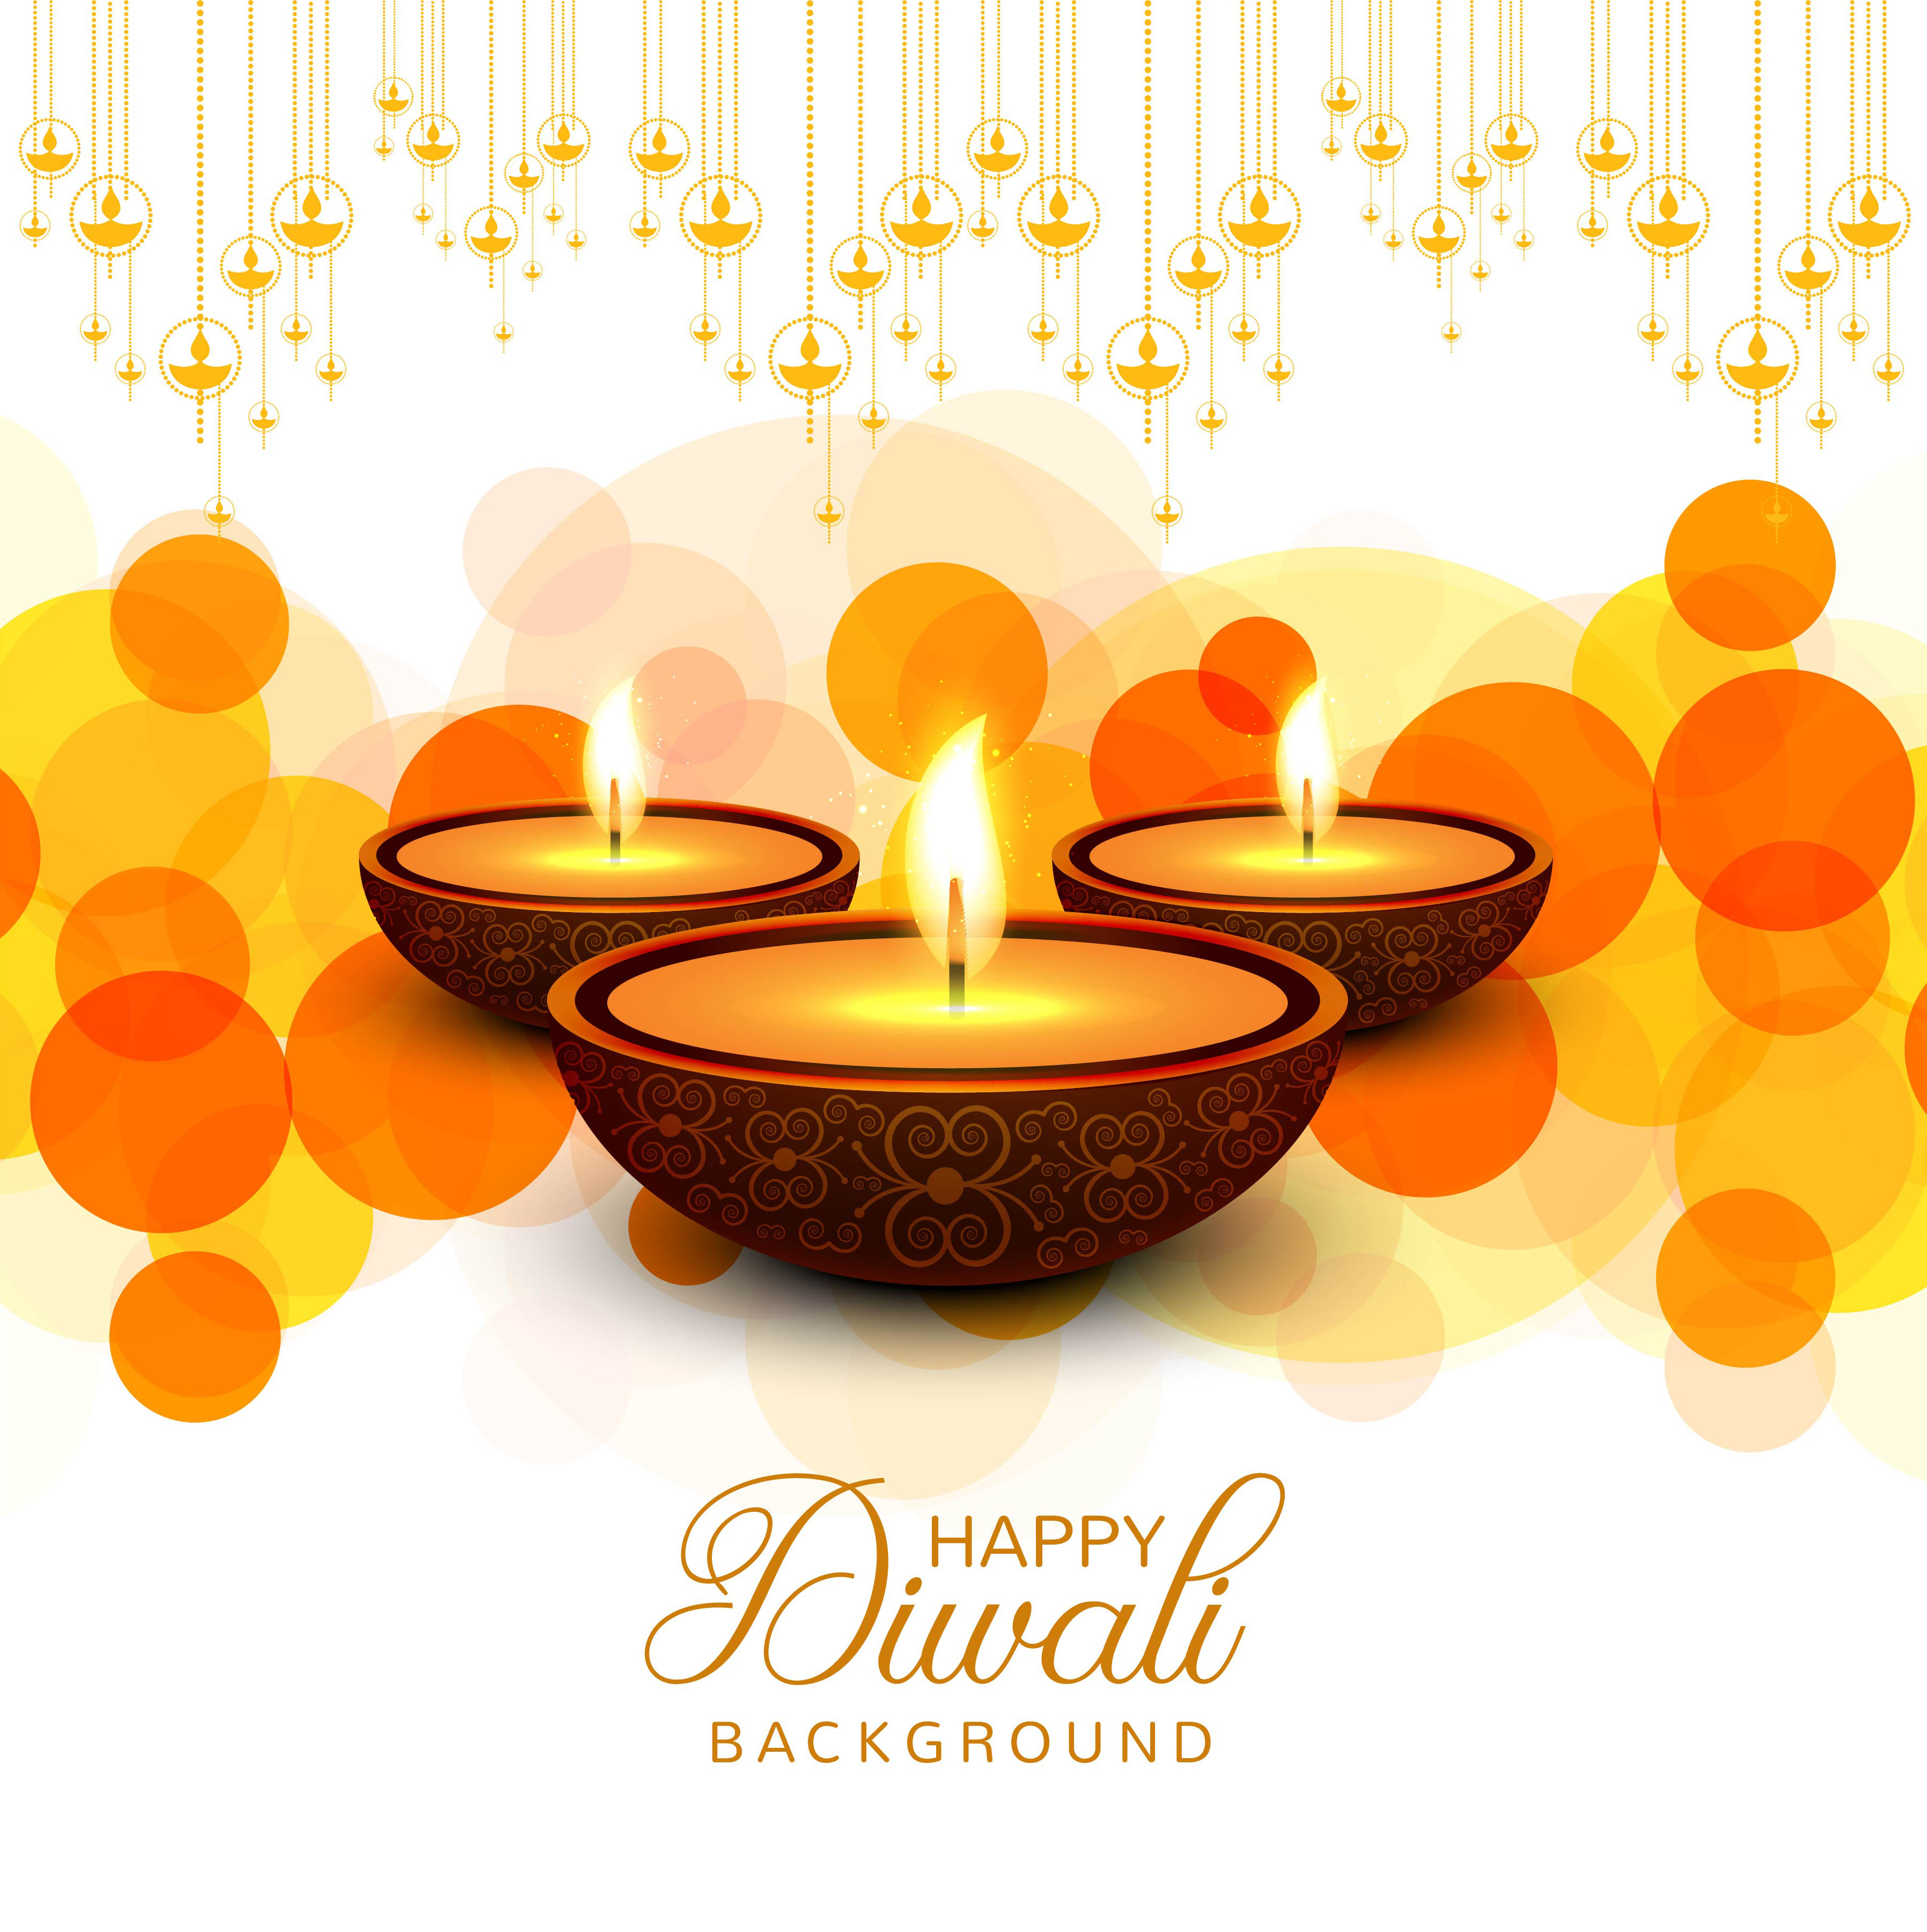 Happy diwali diya oil lamp festival background illustration 249430